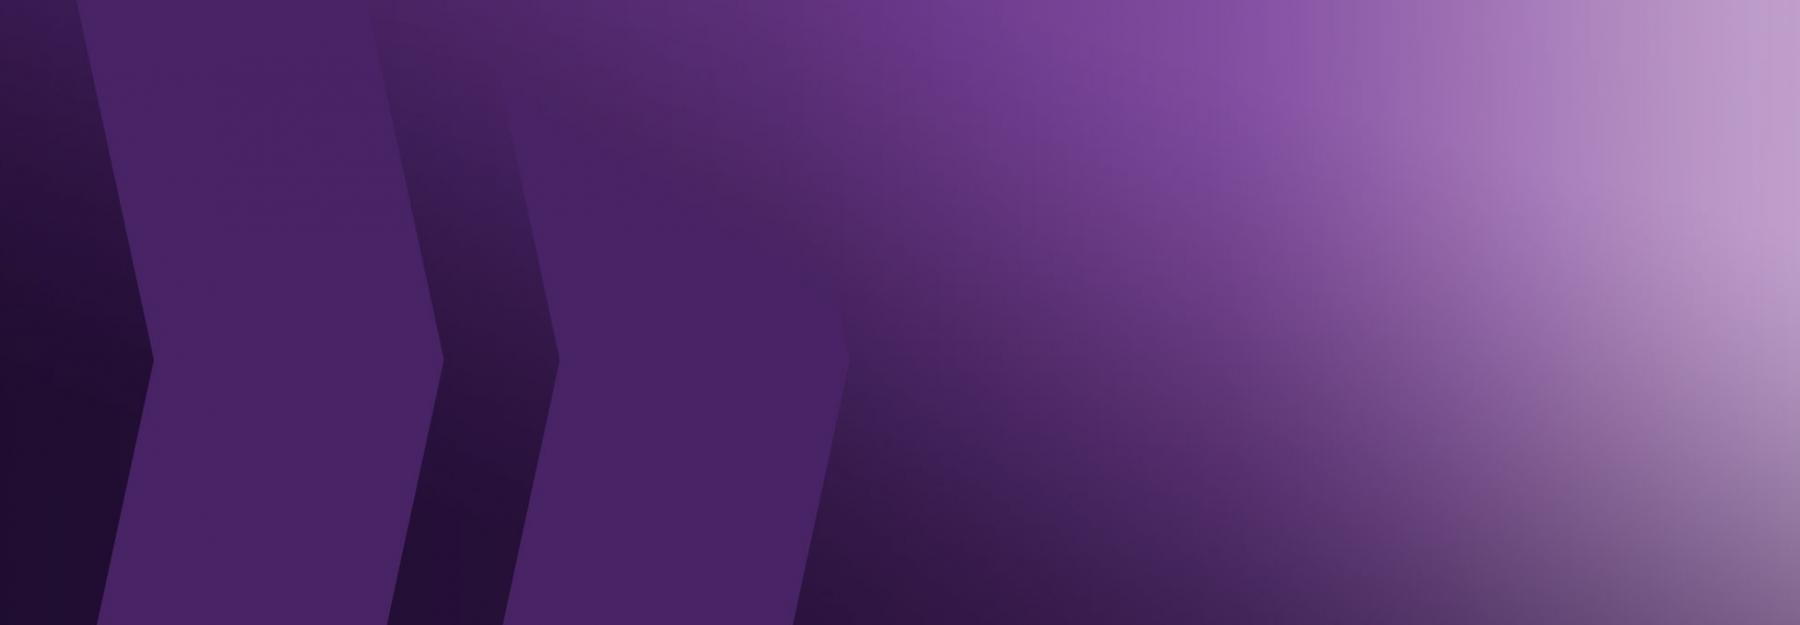 purple wash banner